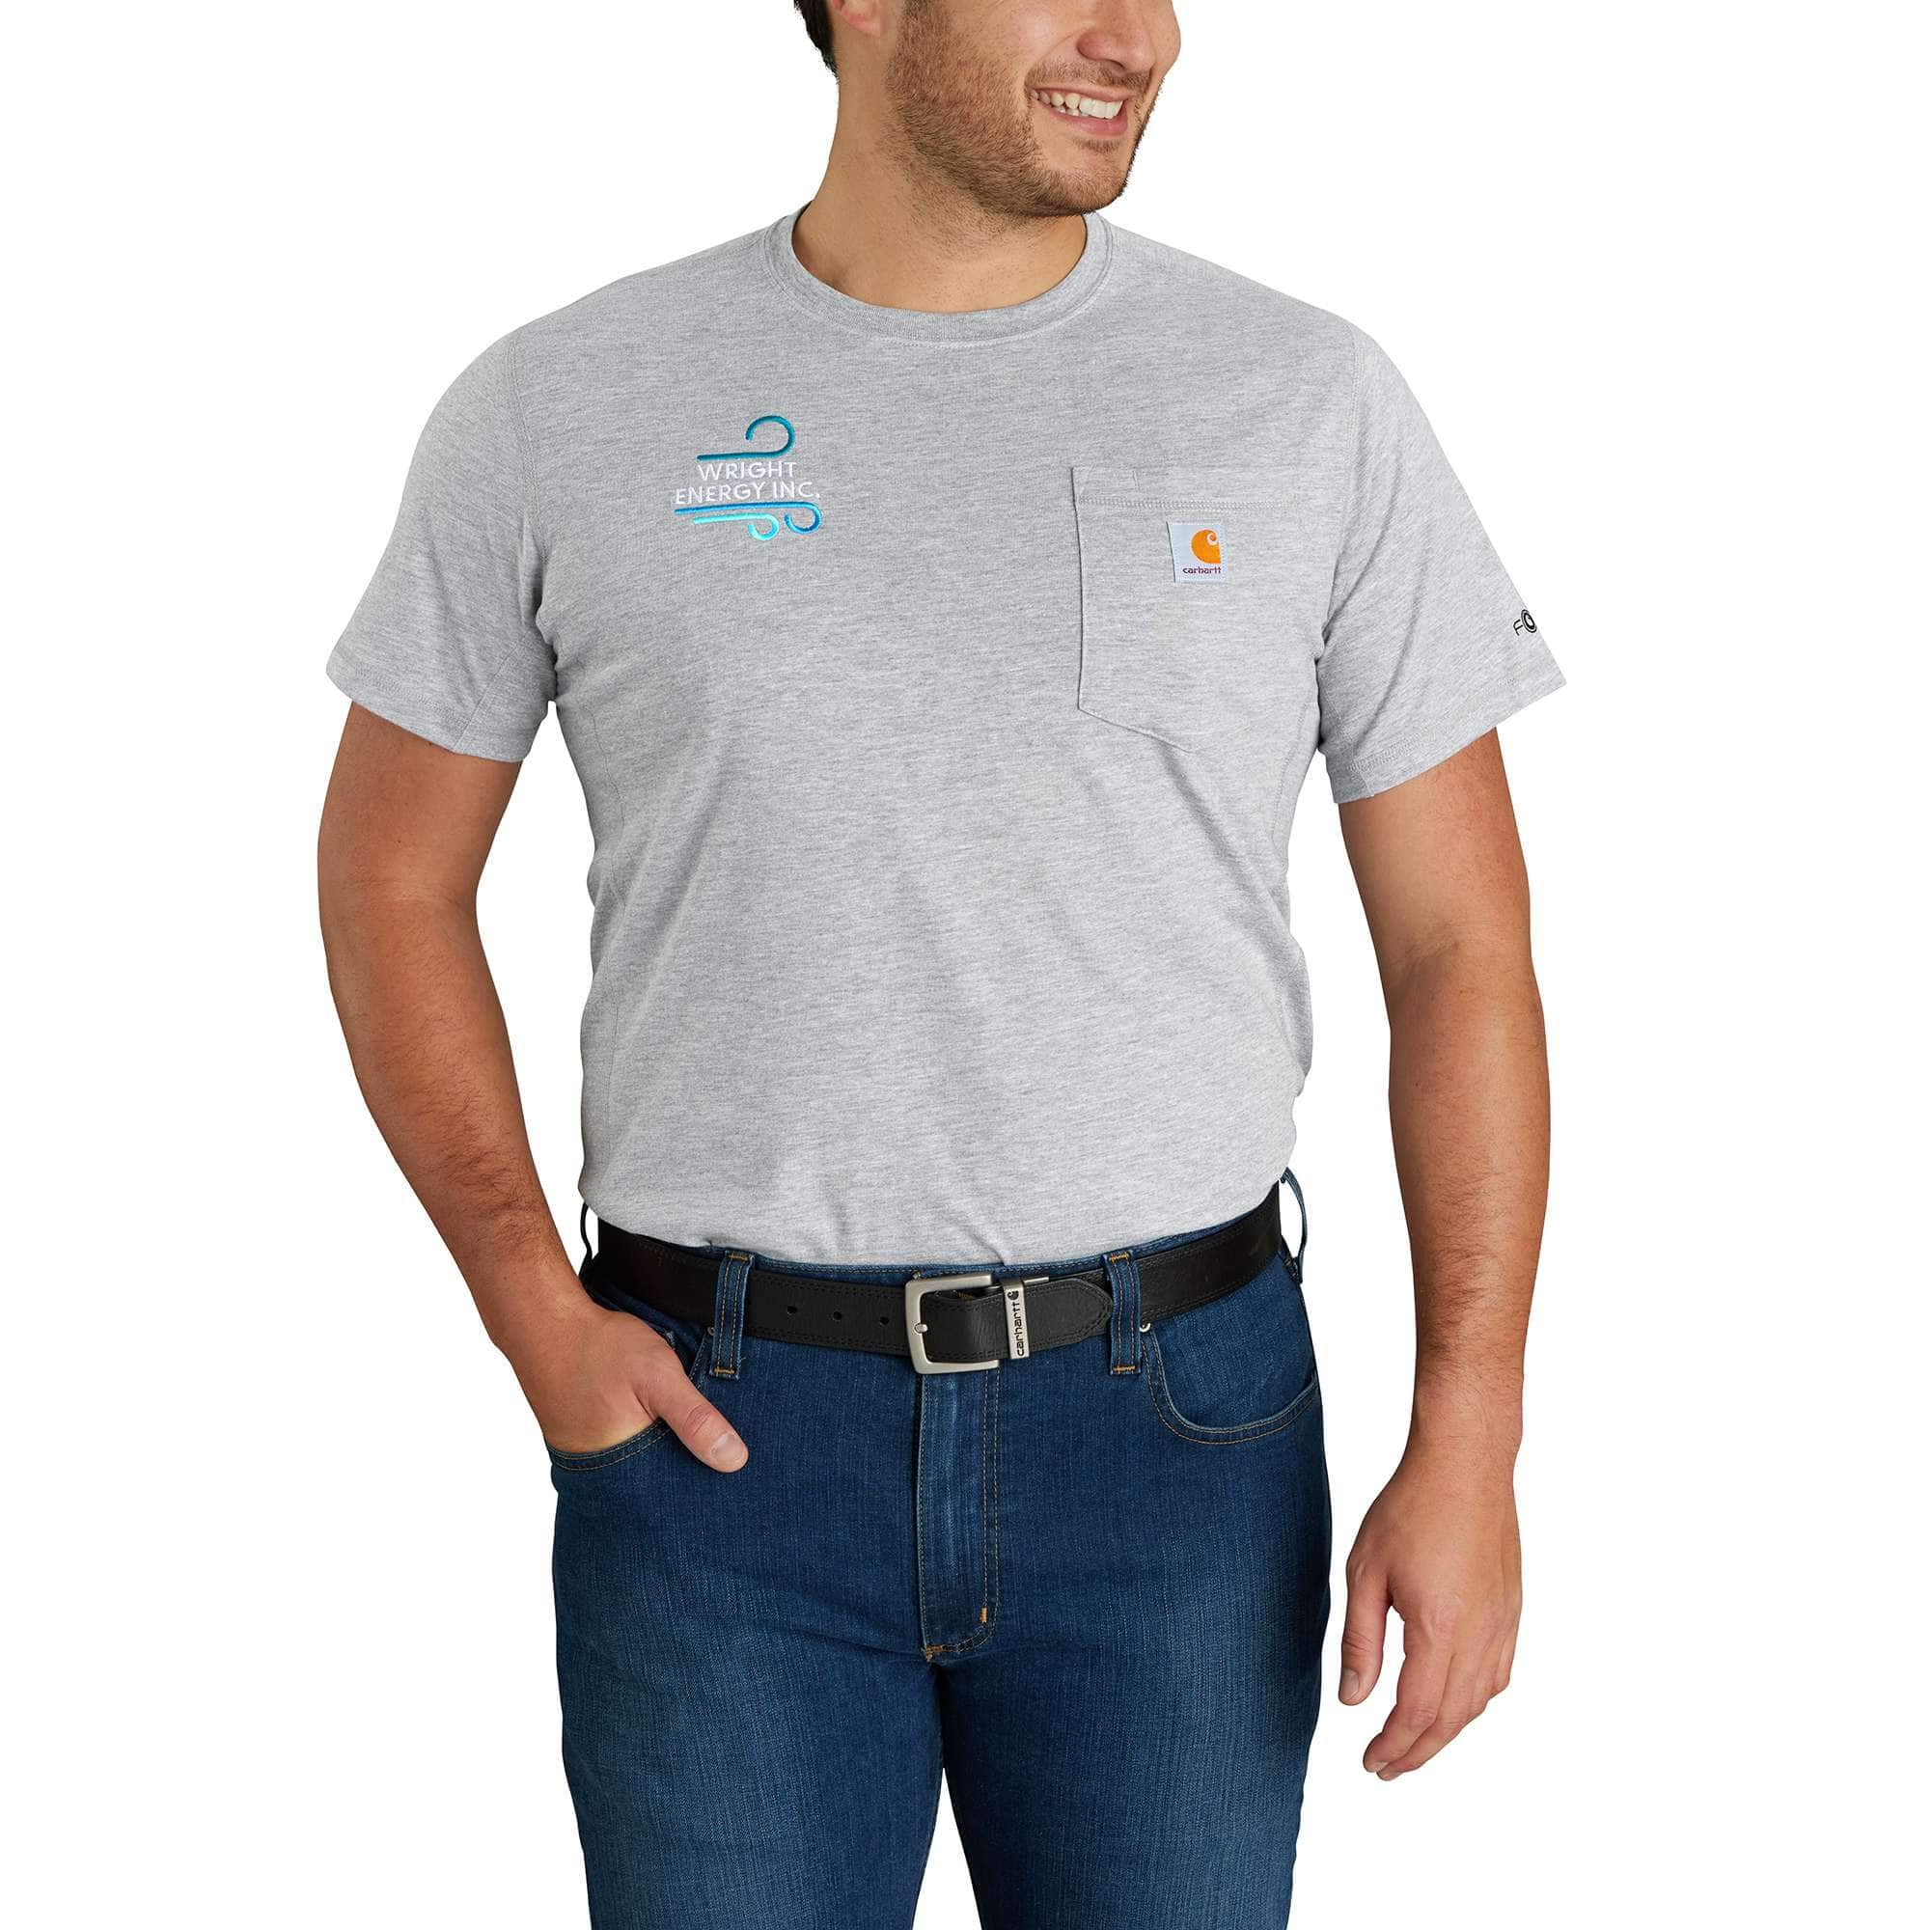 Custom Work Shirts & Embroidered Uniform Shirts